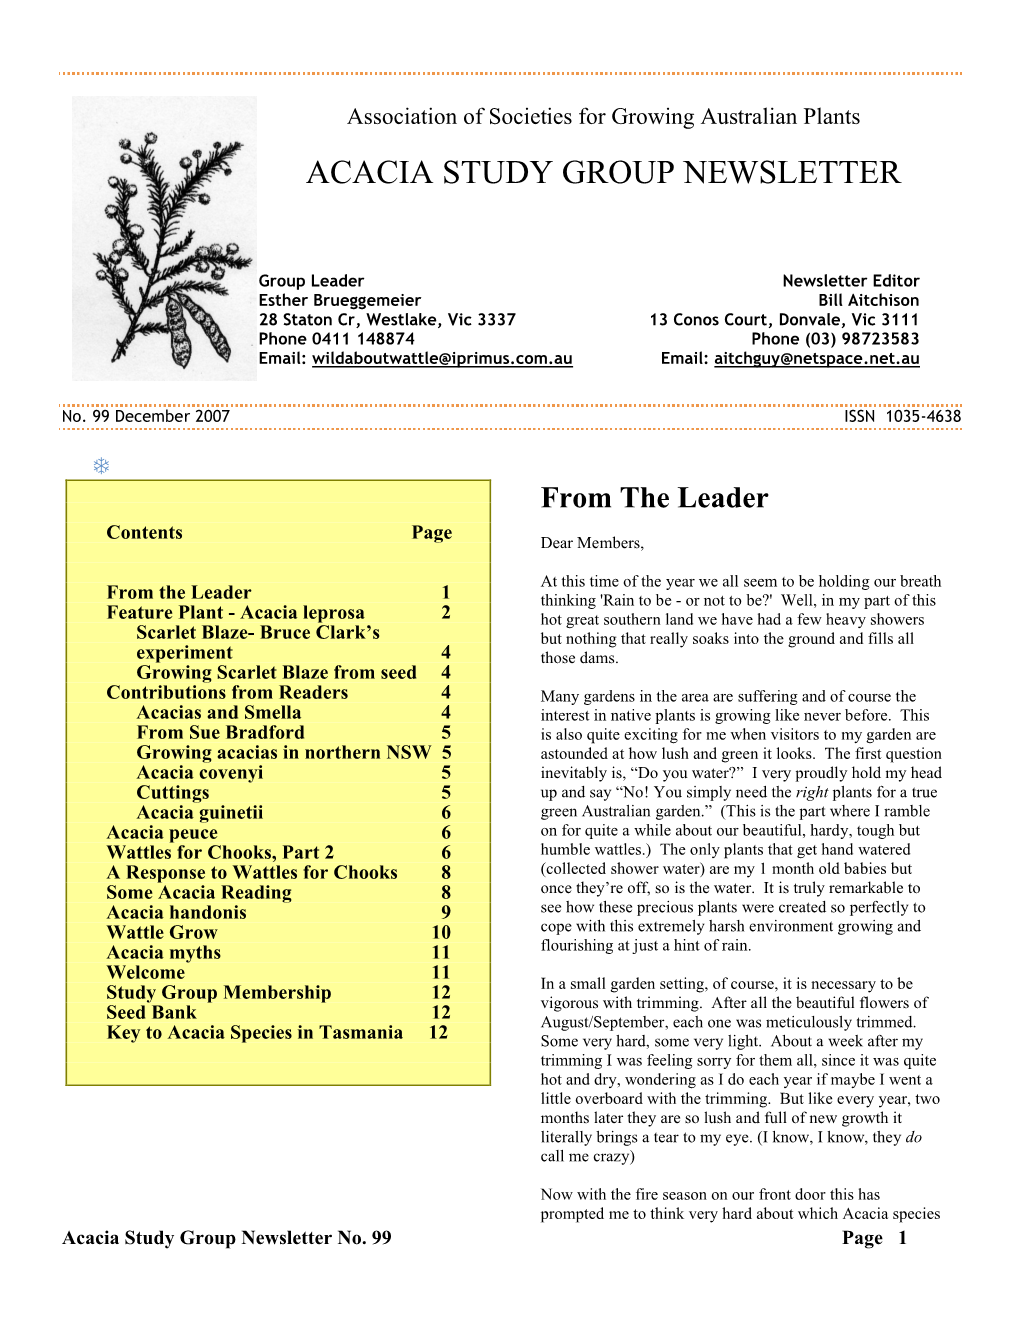 Acacia Leprosa